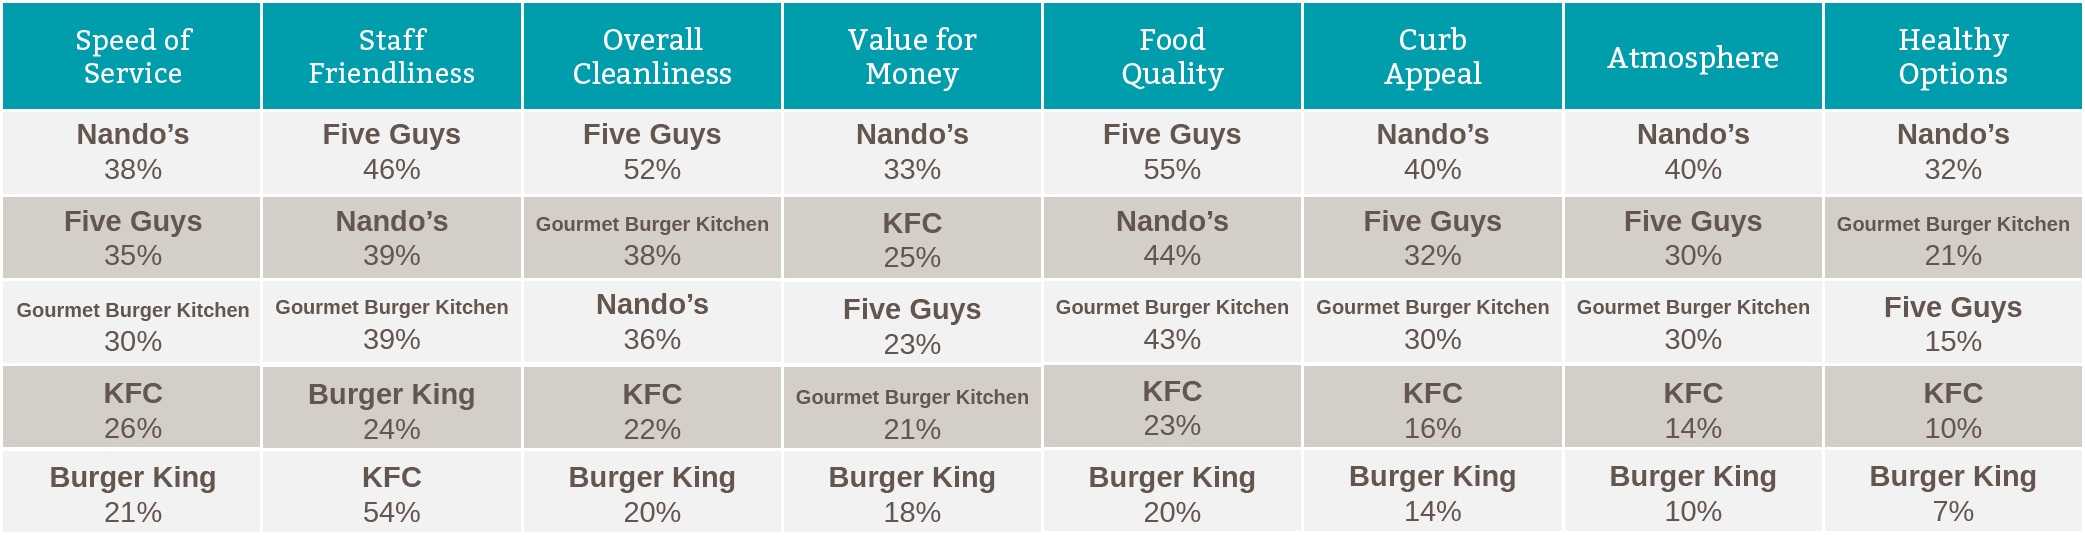 Value for Money Chart QSR UK (Burgers)